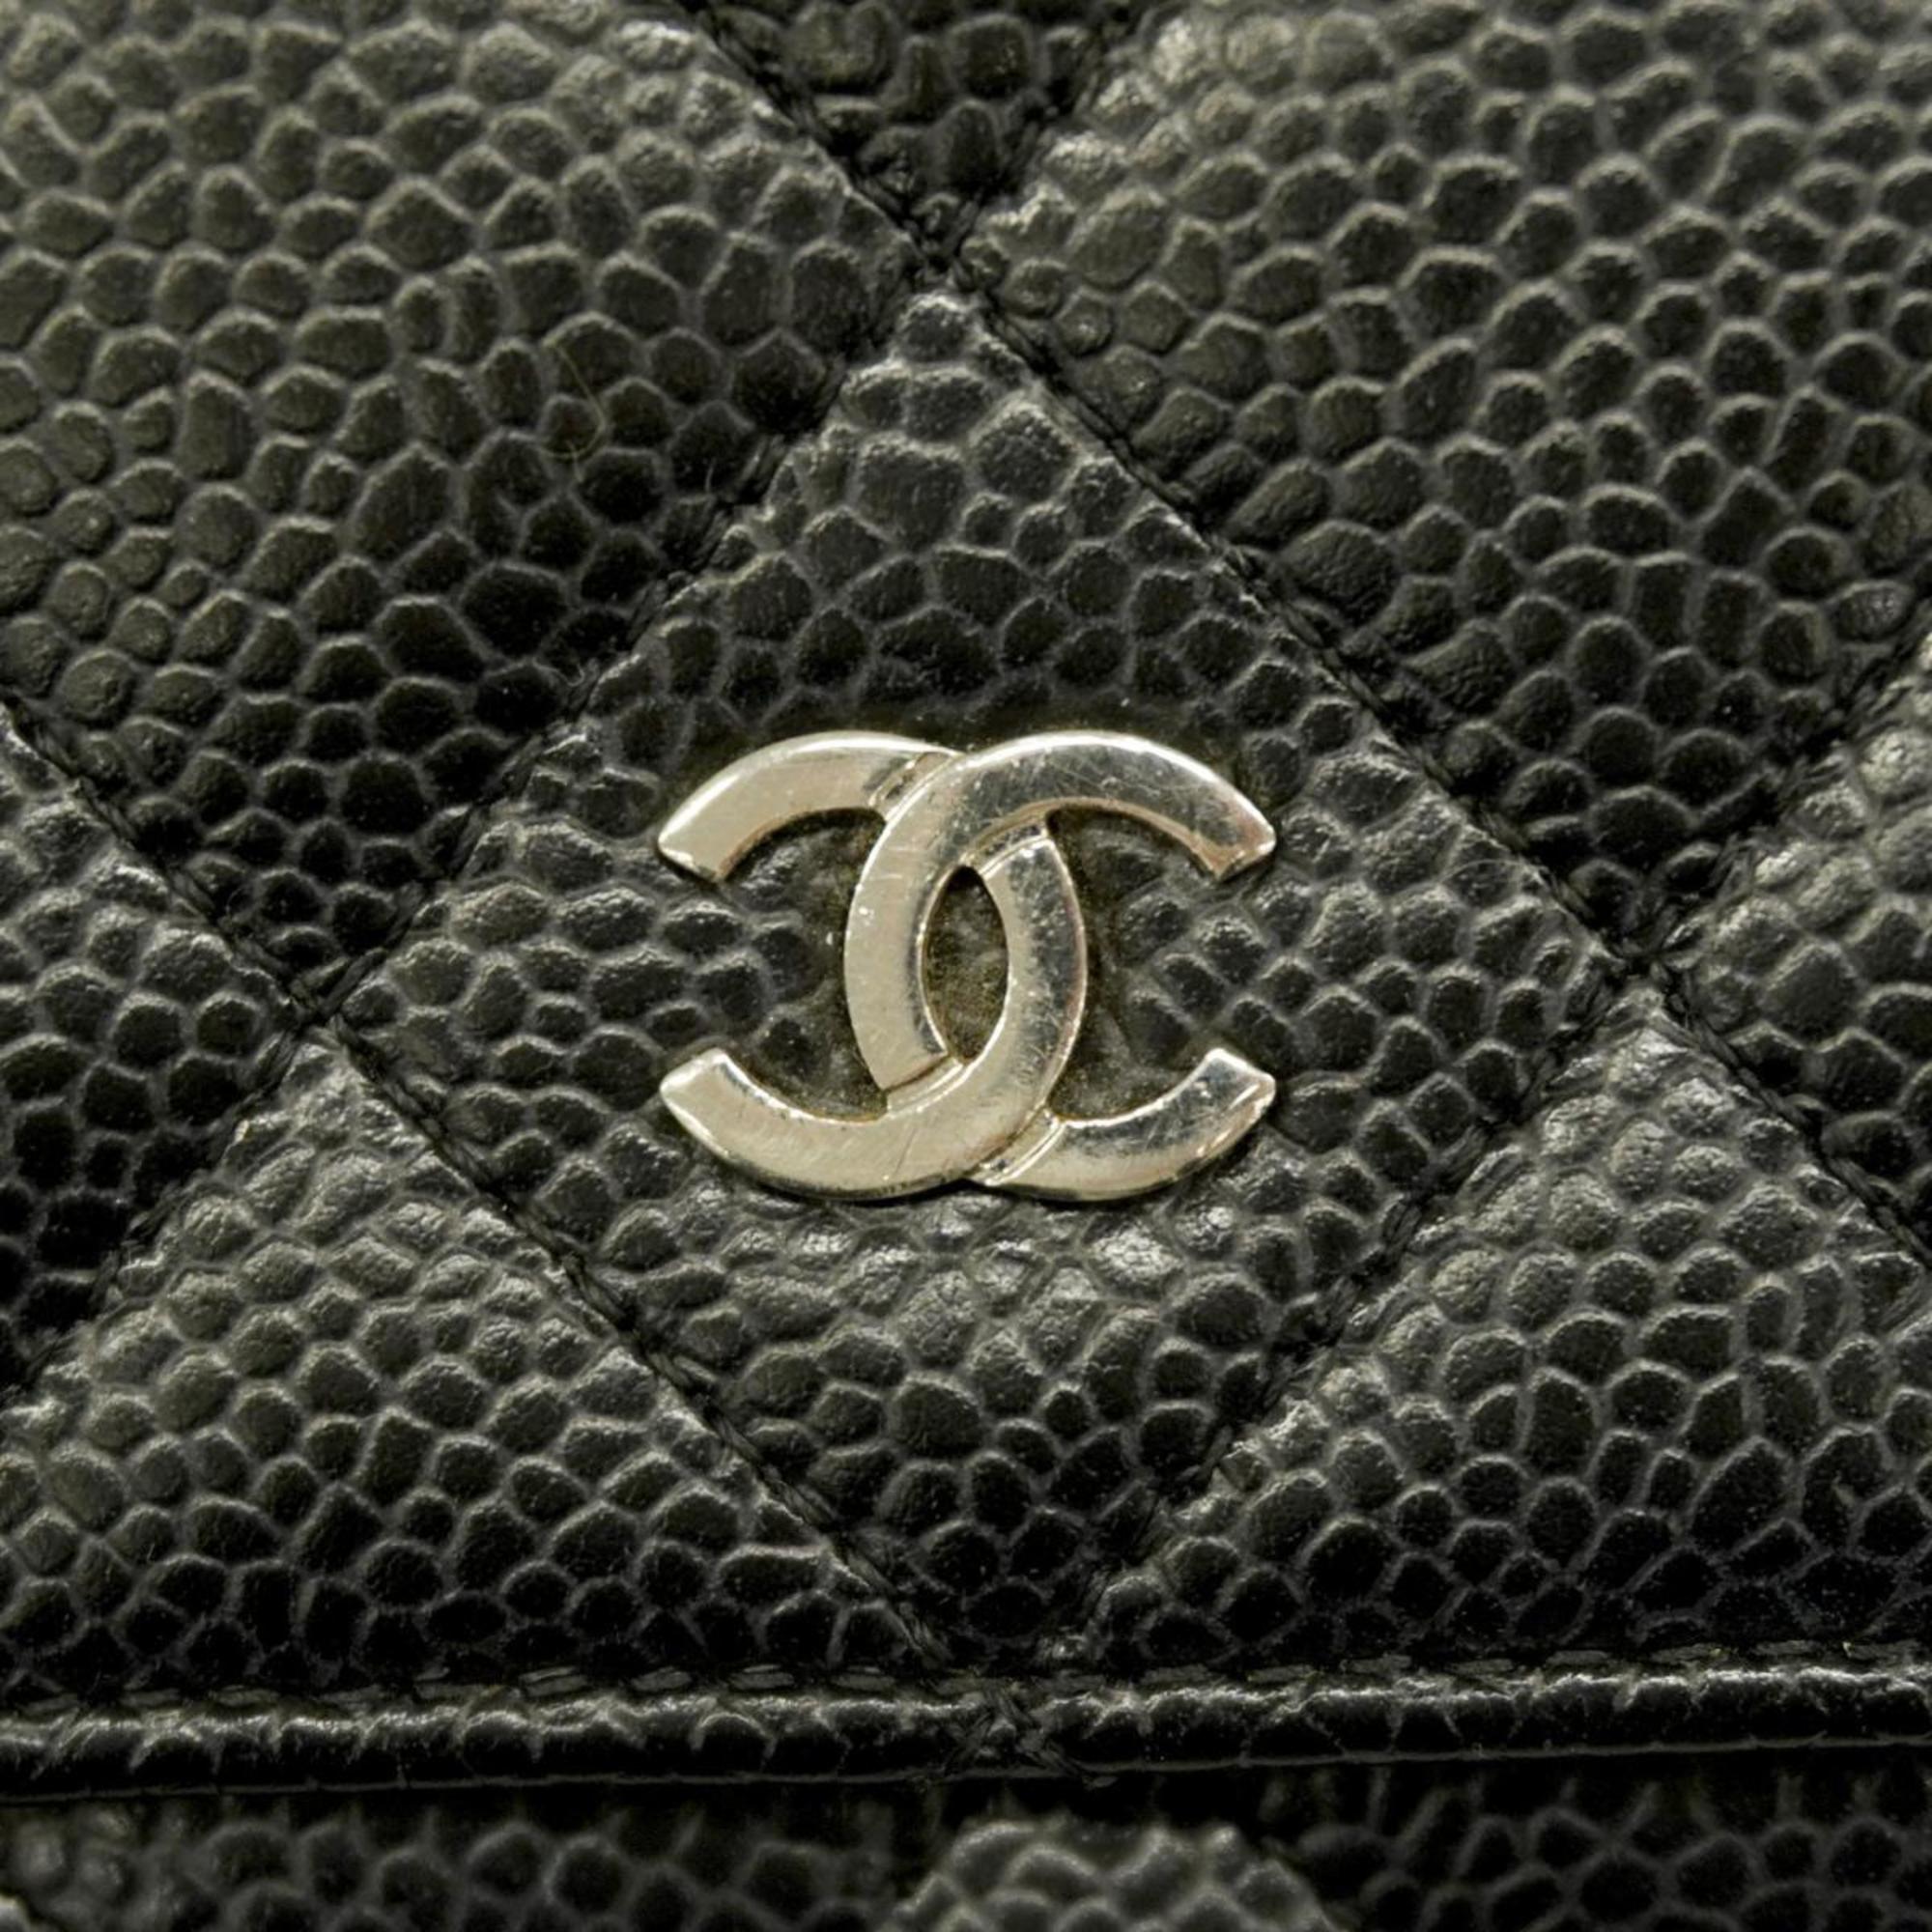 Chanel Shoulder Wallet Matelasse Chain Caviar Skin Black Women's